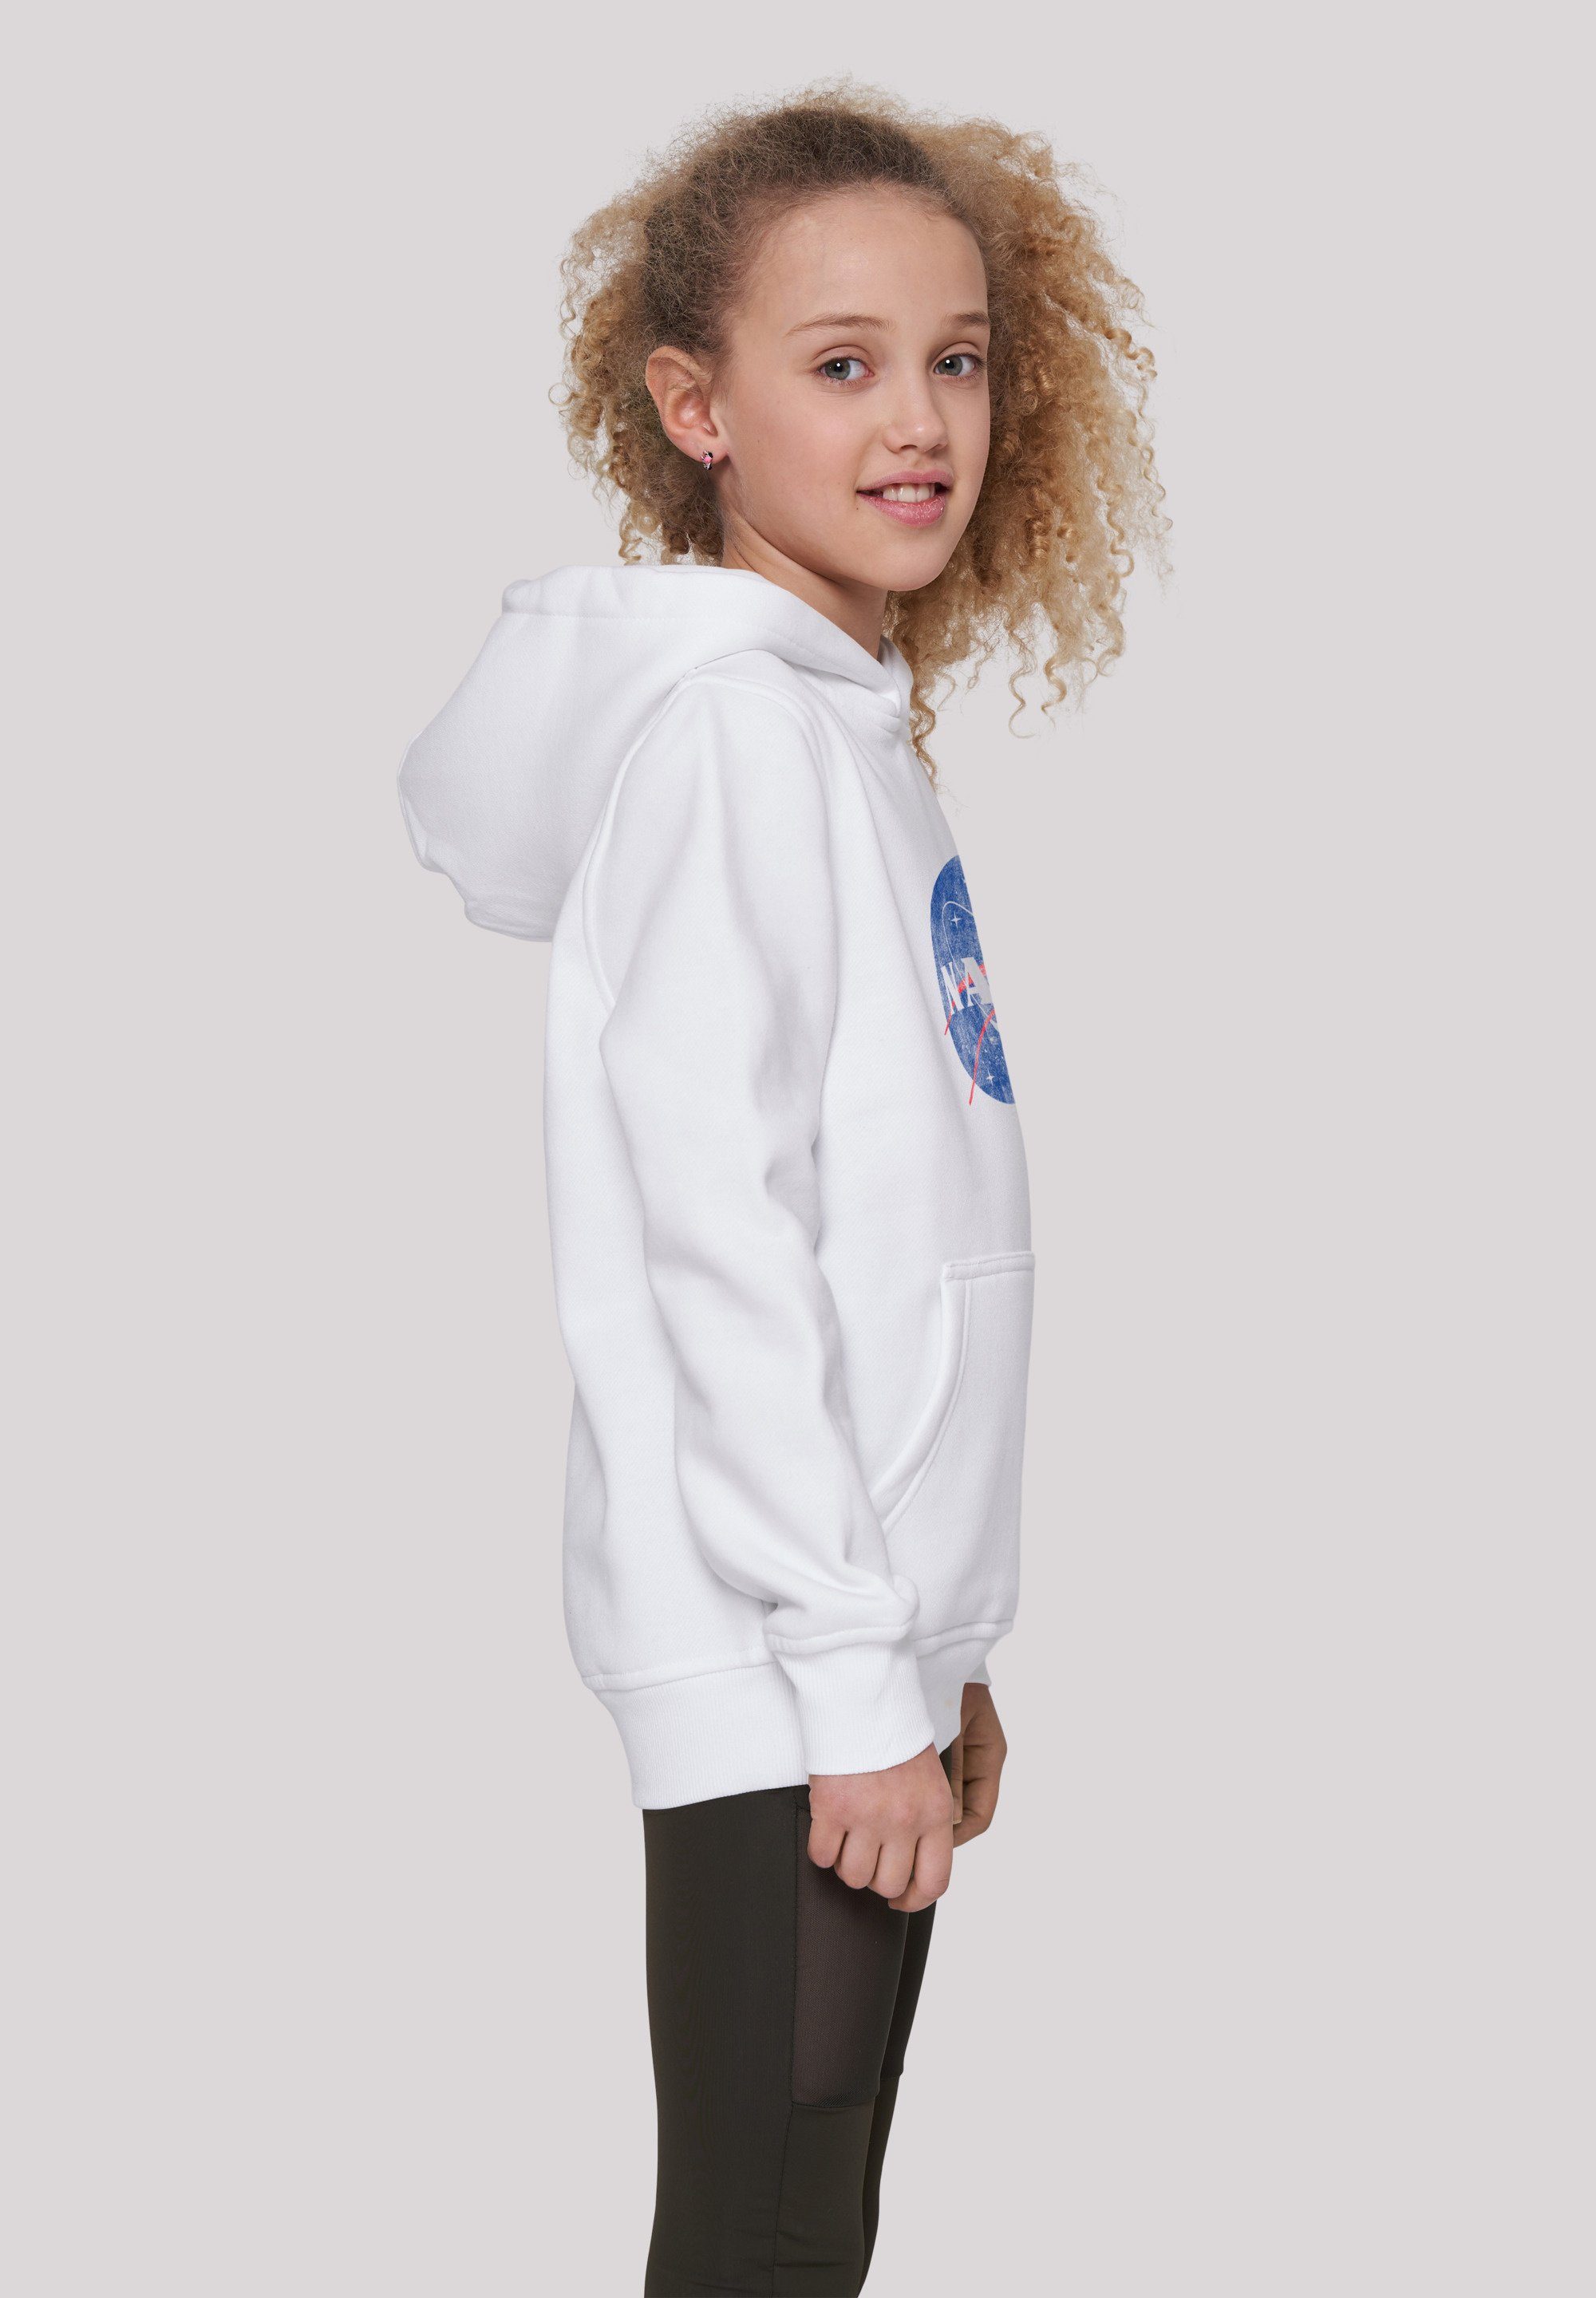 NASA F4NT4STIC Sweatshirt Classic Merch,Jungen,Mädchen,Bedruckt Unisex Logo Insignia Kinder,Premium Distressed